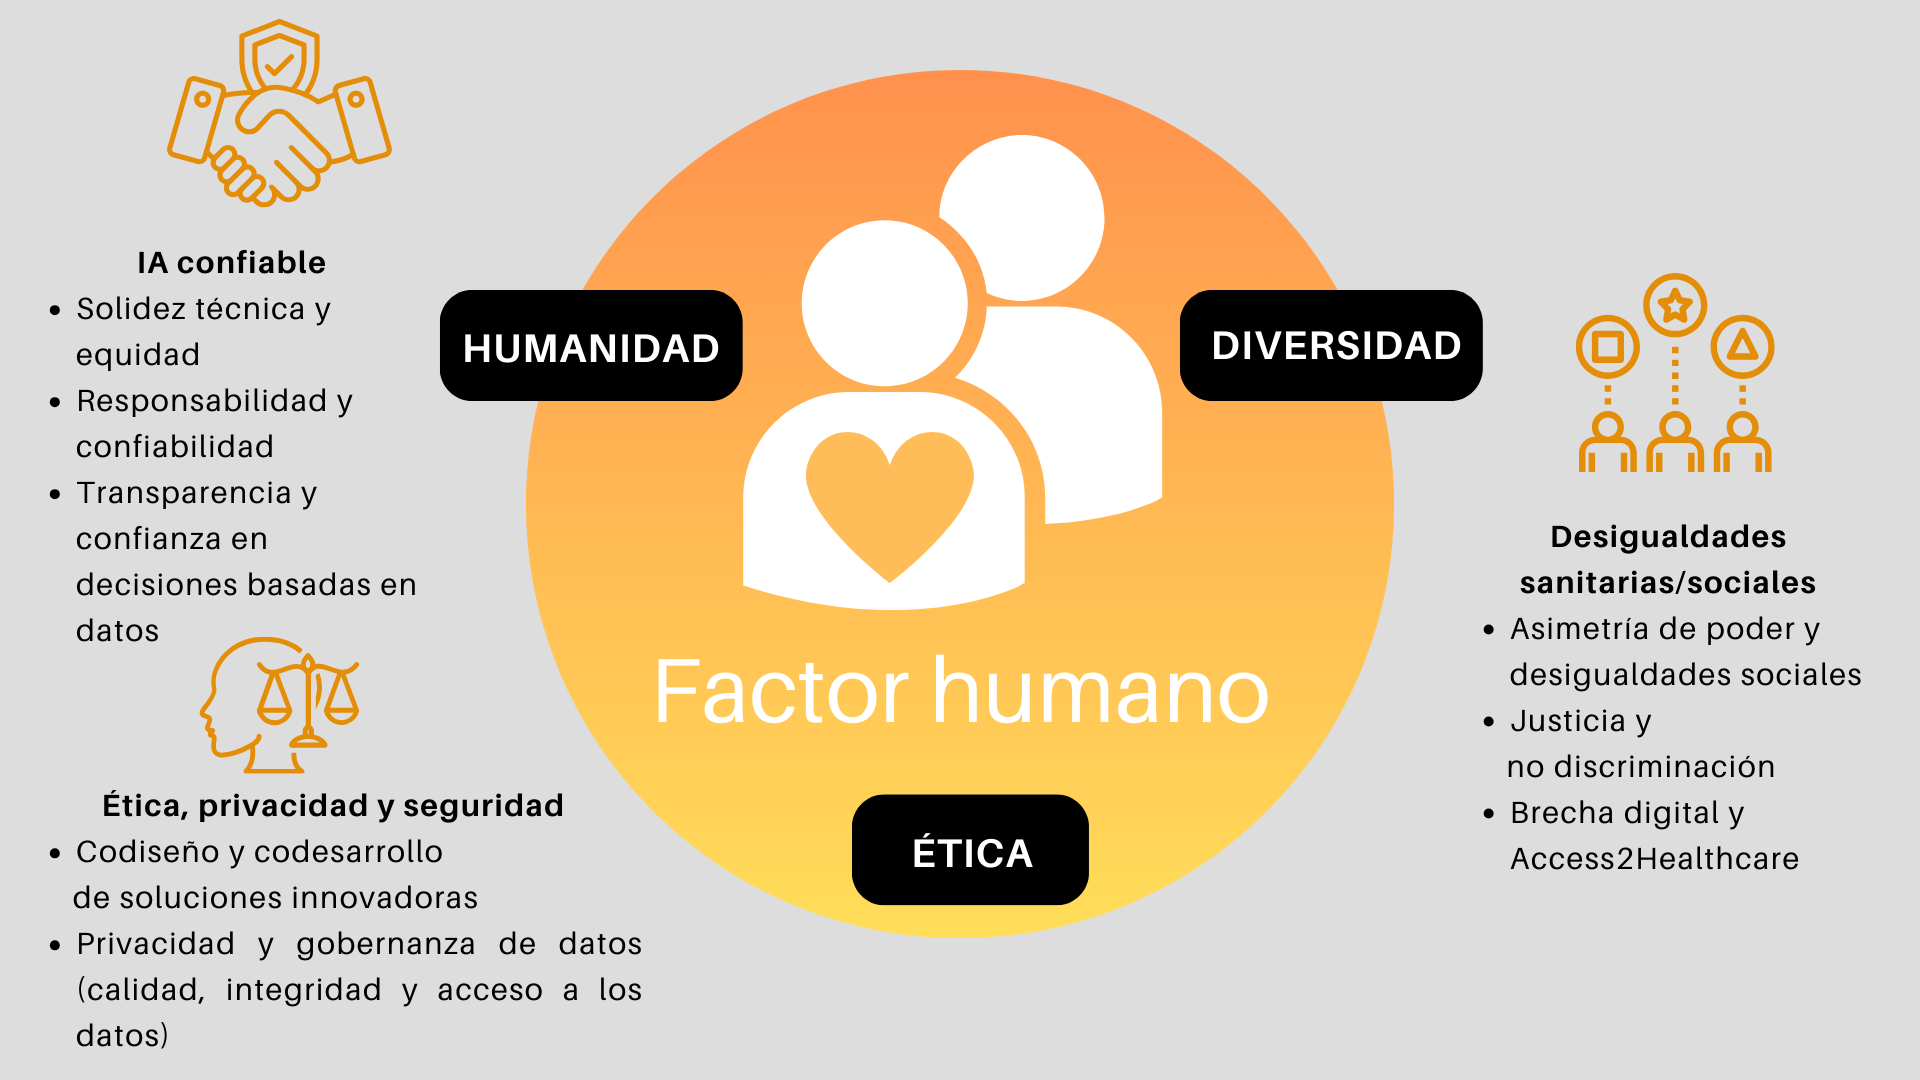 Factor humano